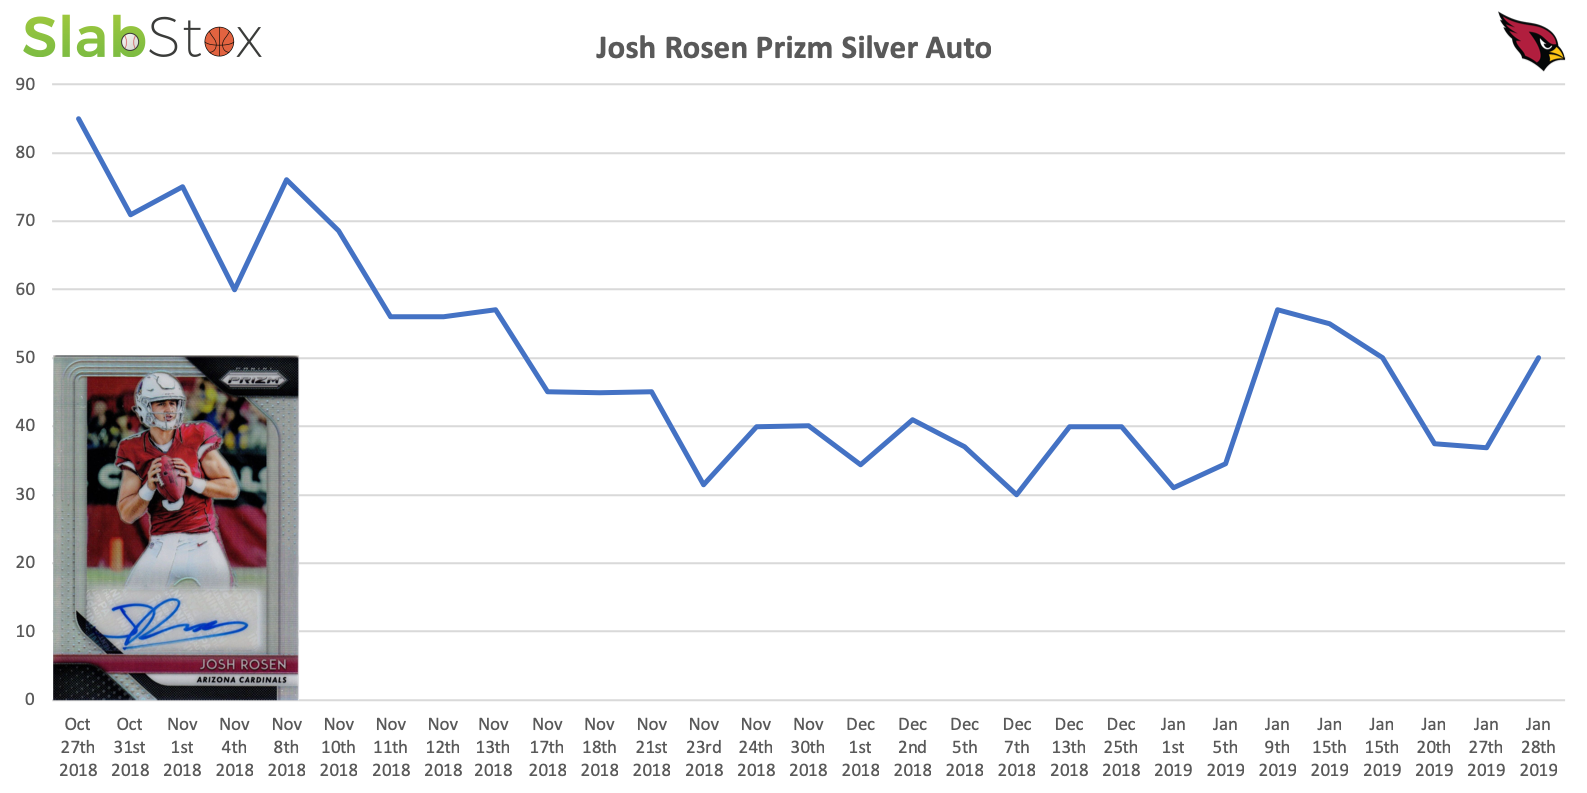 SlabStox infographic for Josh Rosen Prizm Silver Auto sports trading card